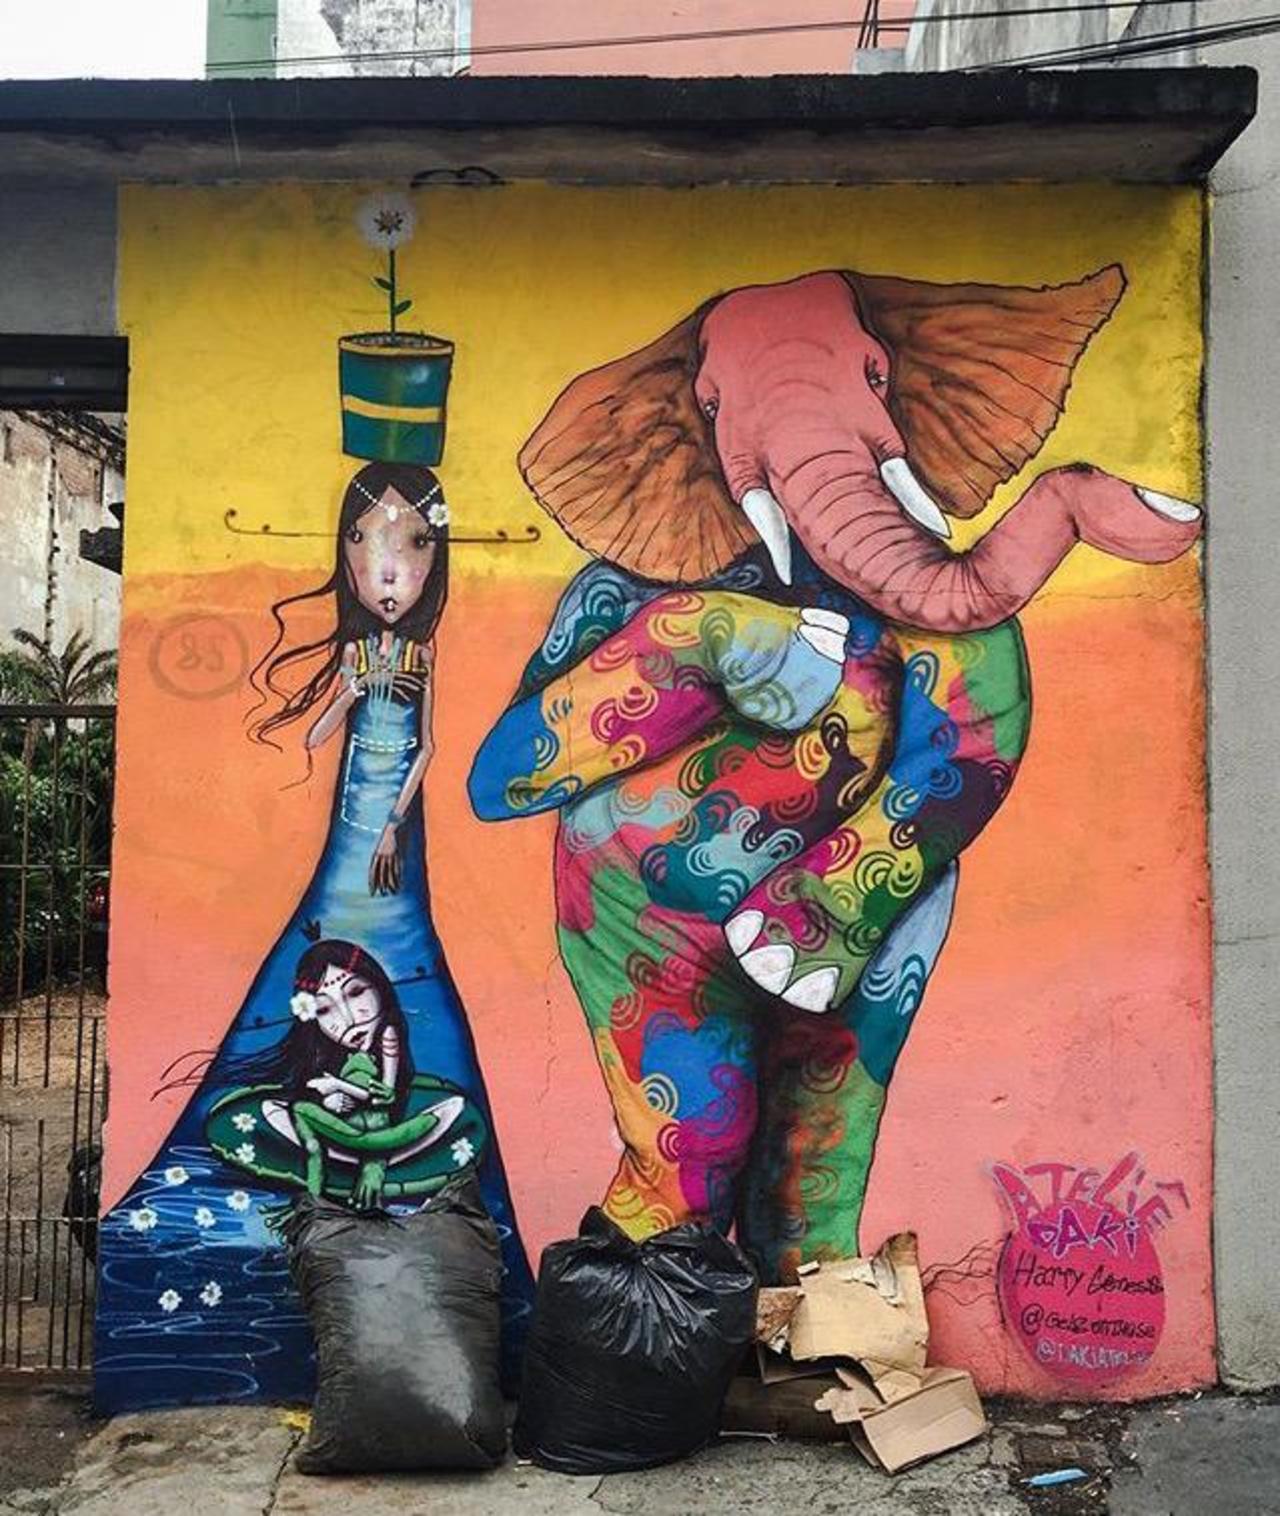 Street Art by Harry Geneis & Gelson in São Paulo 

#art #mural #graffiti #streetart http://t.co/TlExecNm4i